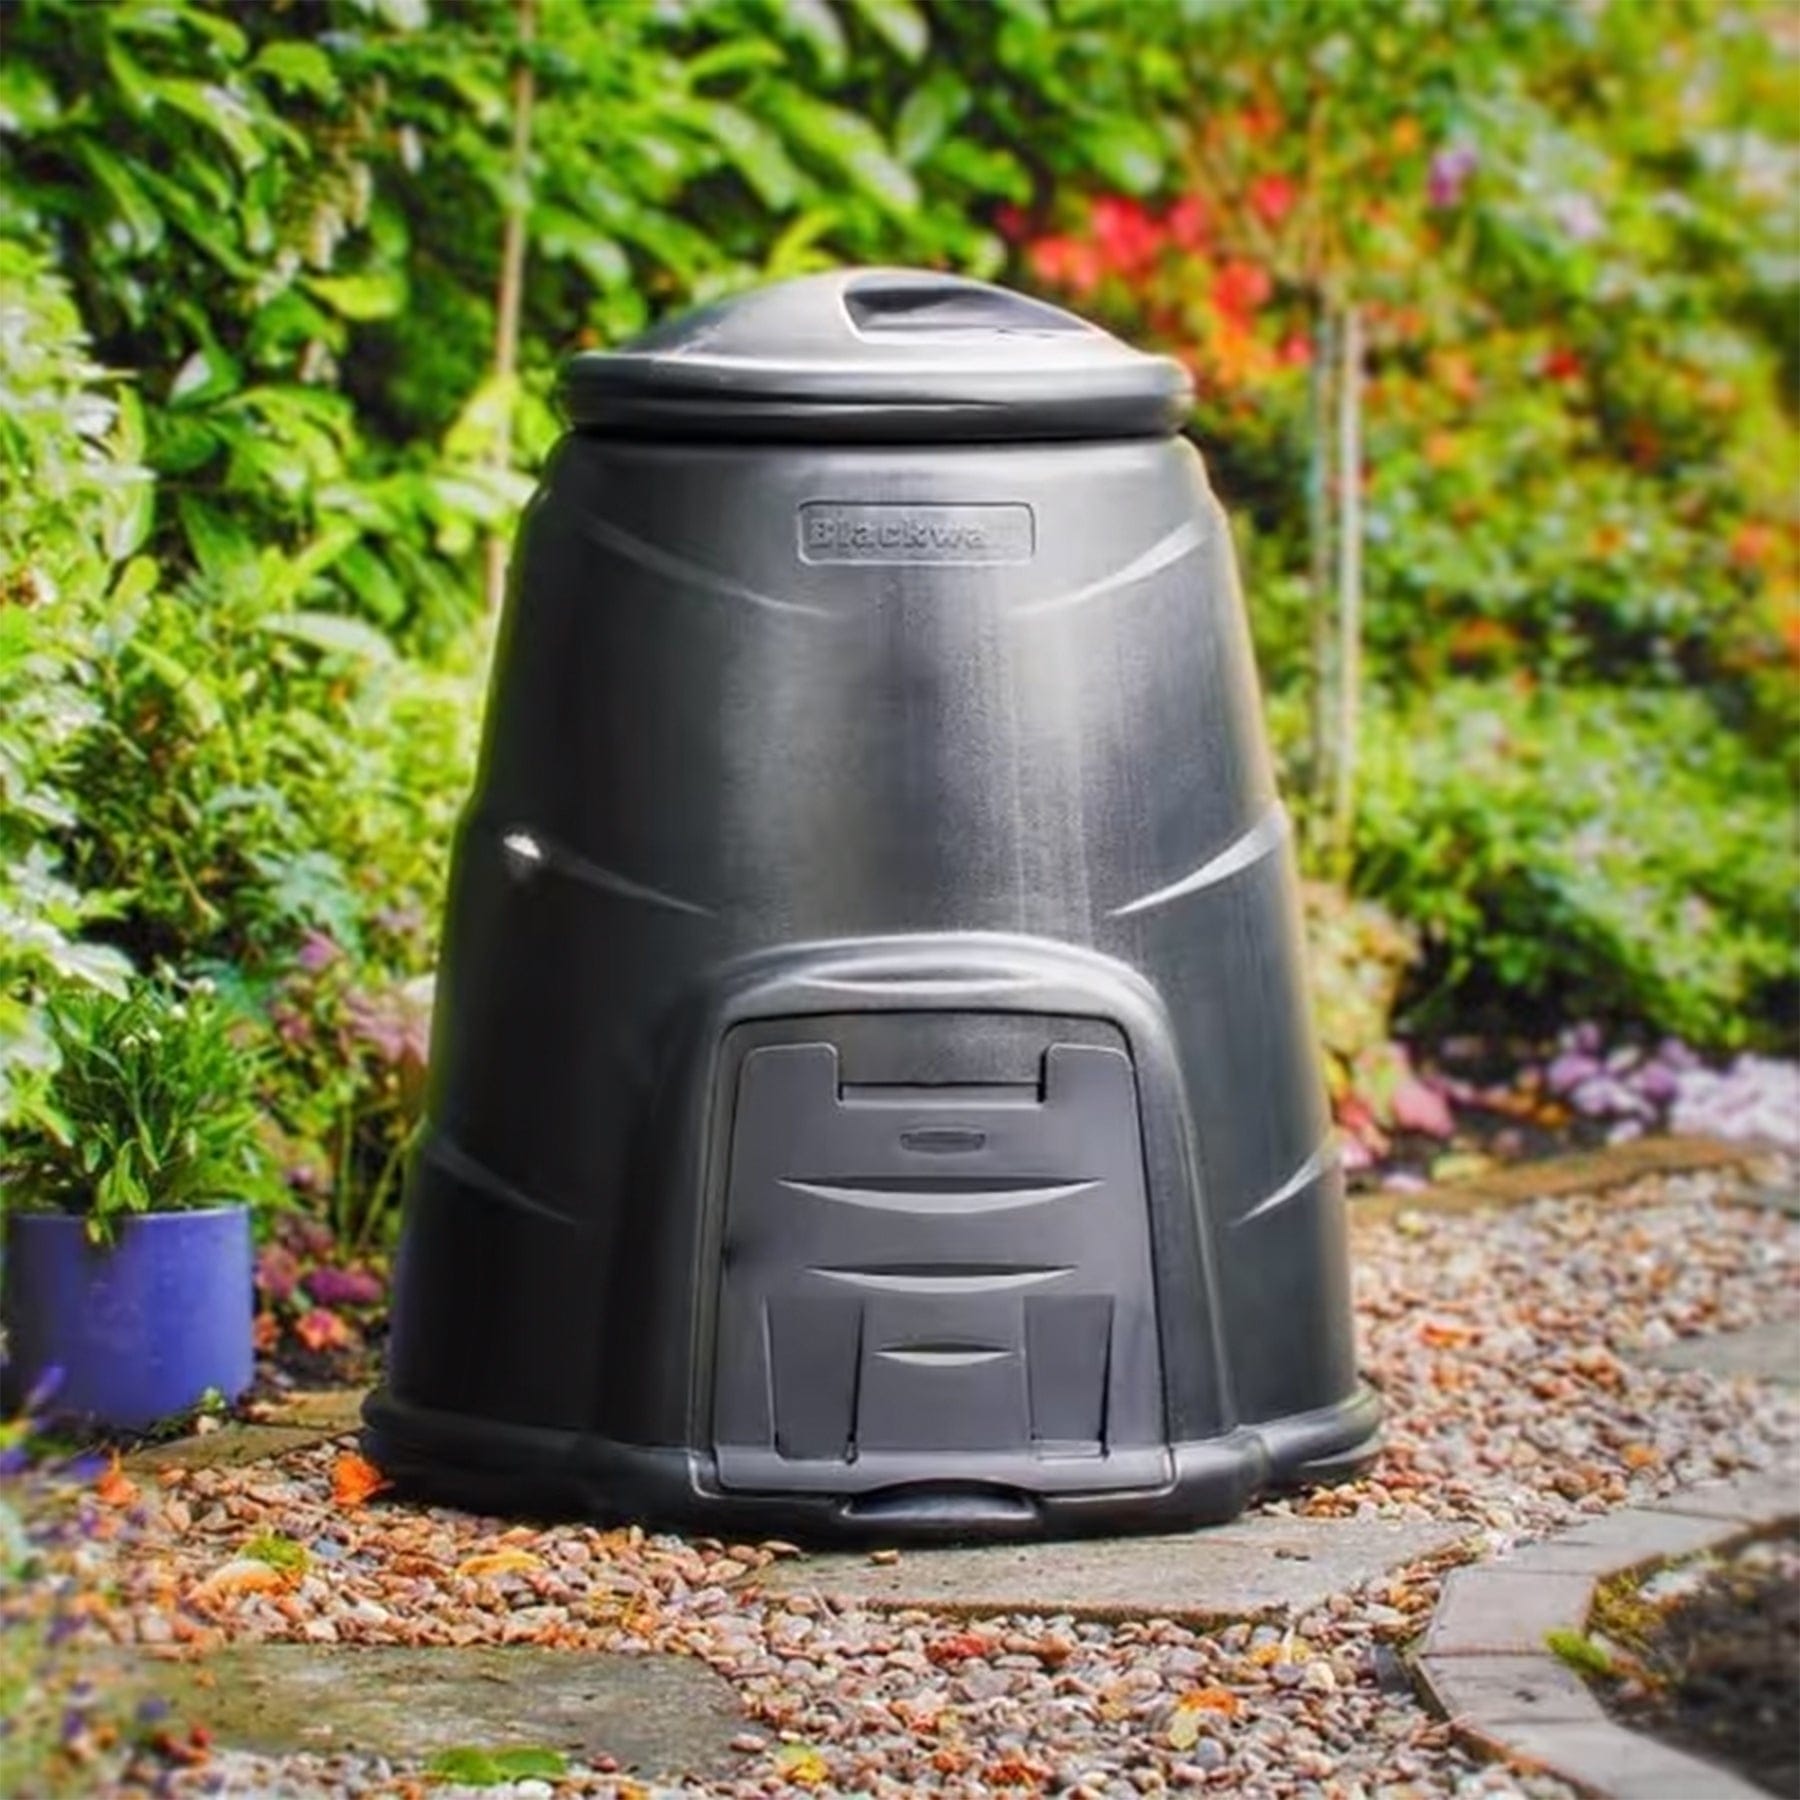 330l black compost converter